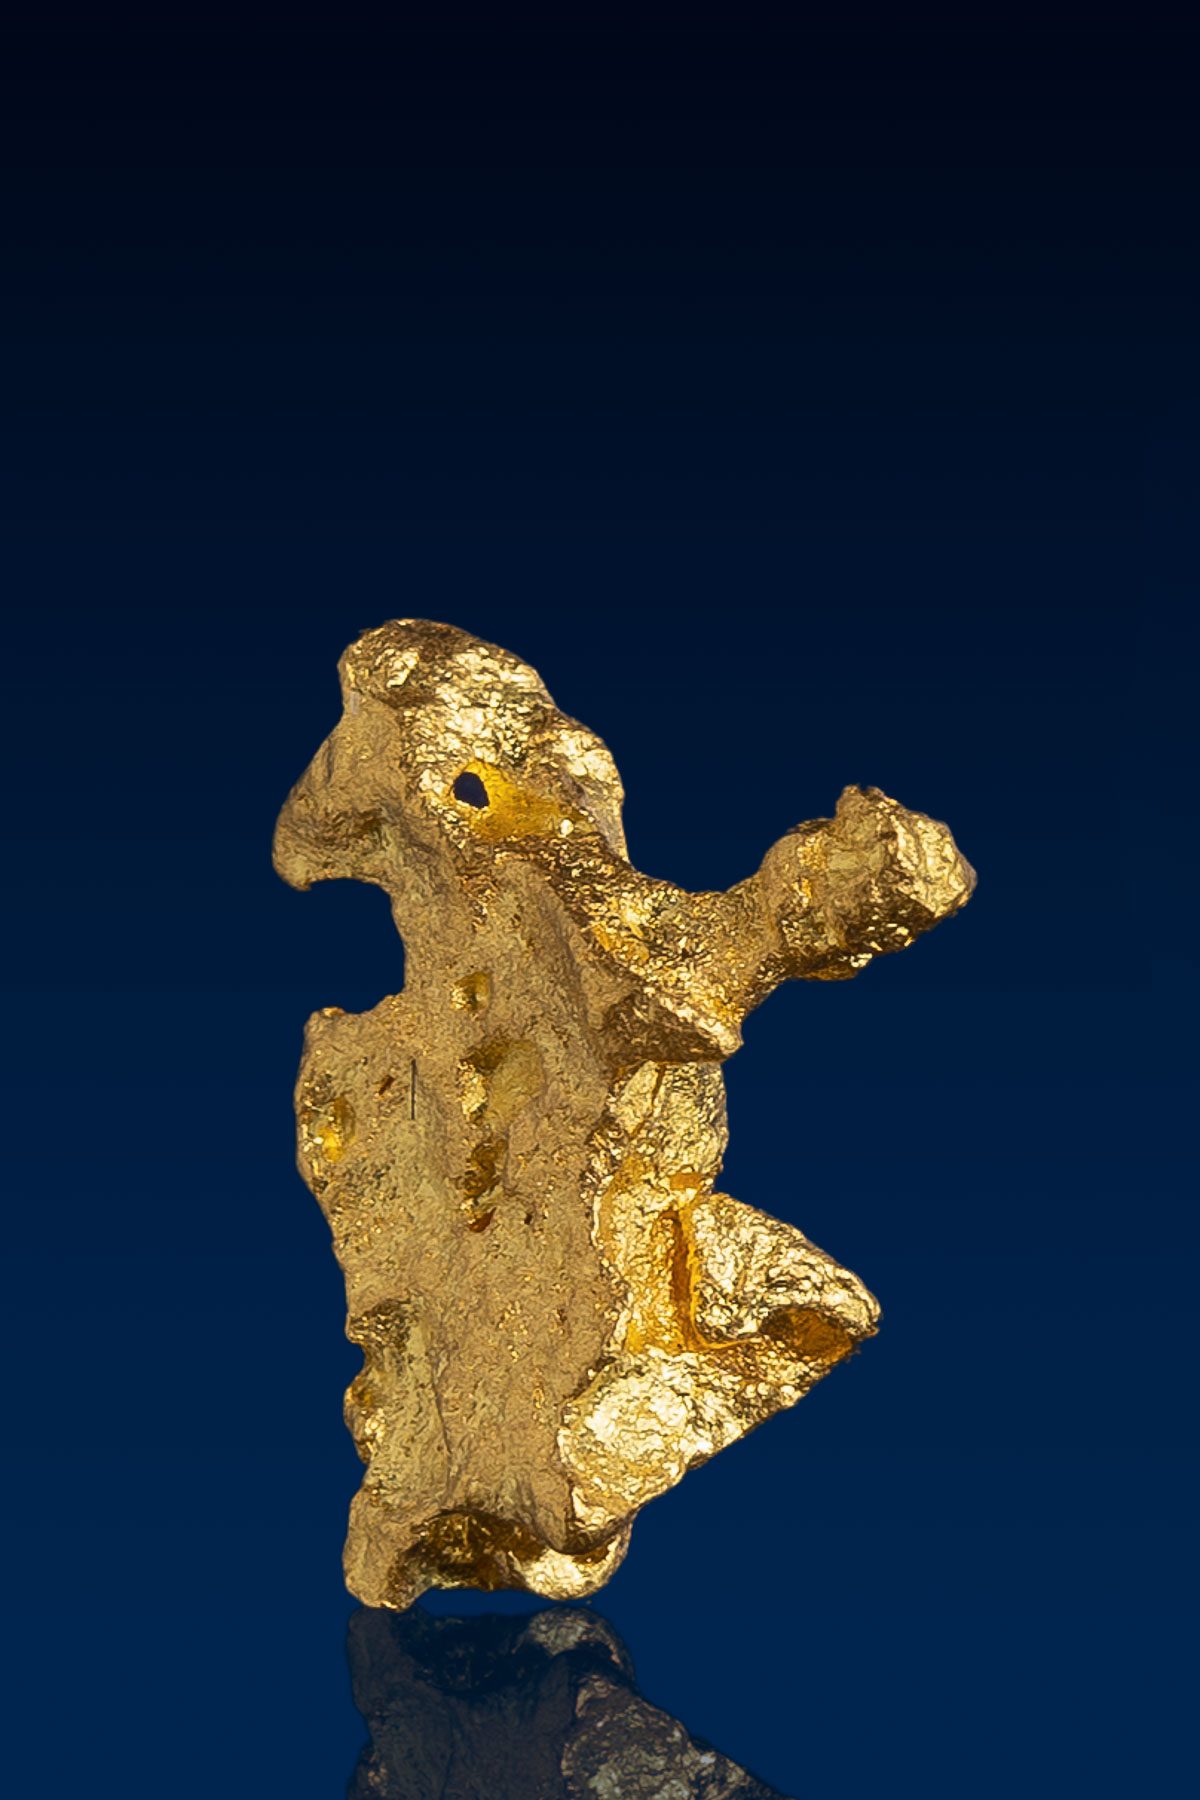 Oen-Armed Australian Natural Gold Nugget - 0.90 grams